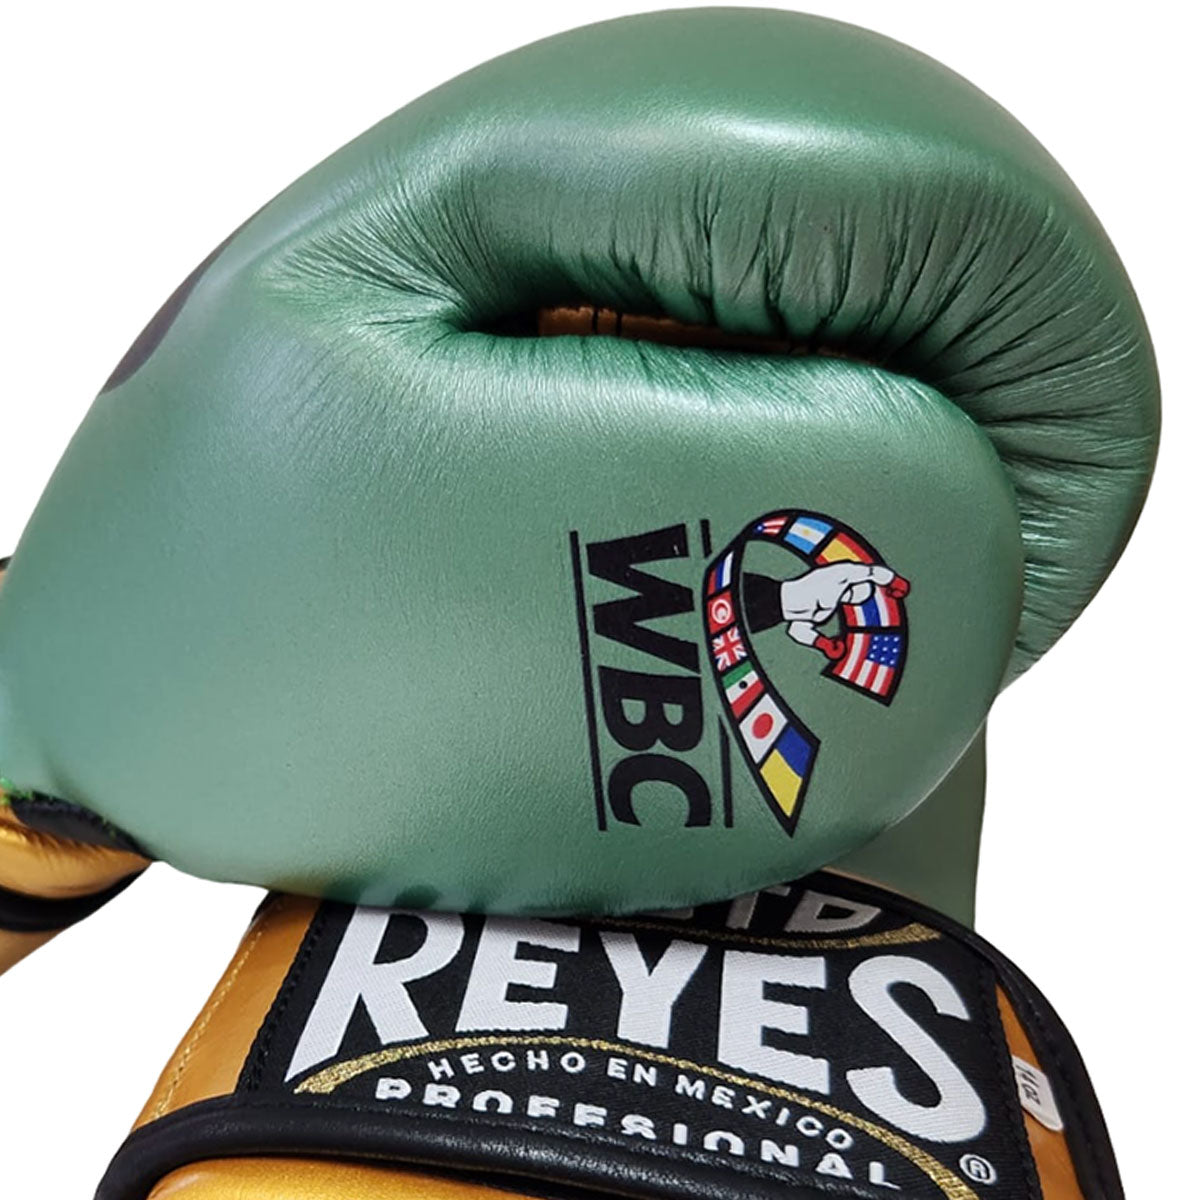 Cleto Reyes Professional Boxing Gloves - WBC Edition